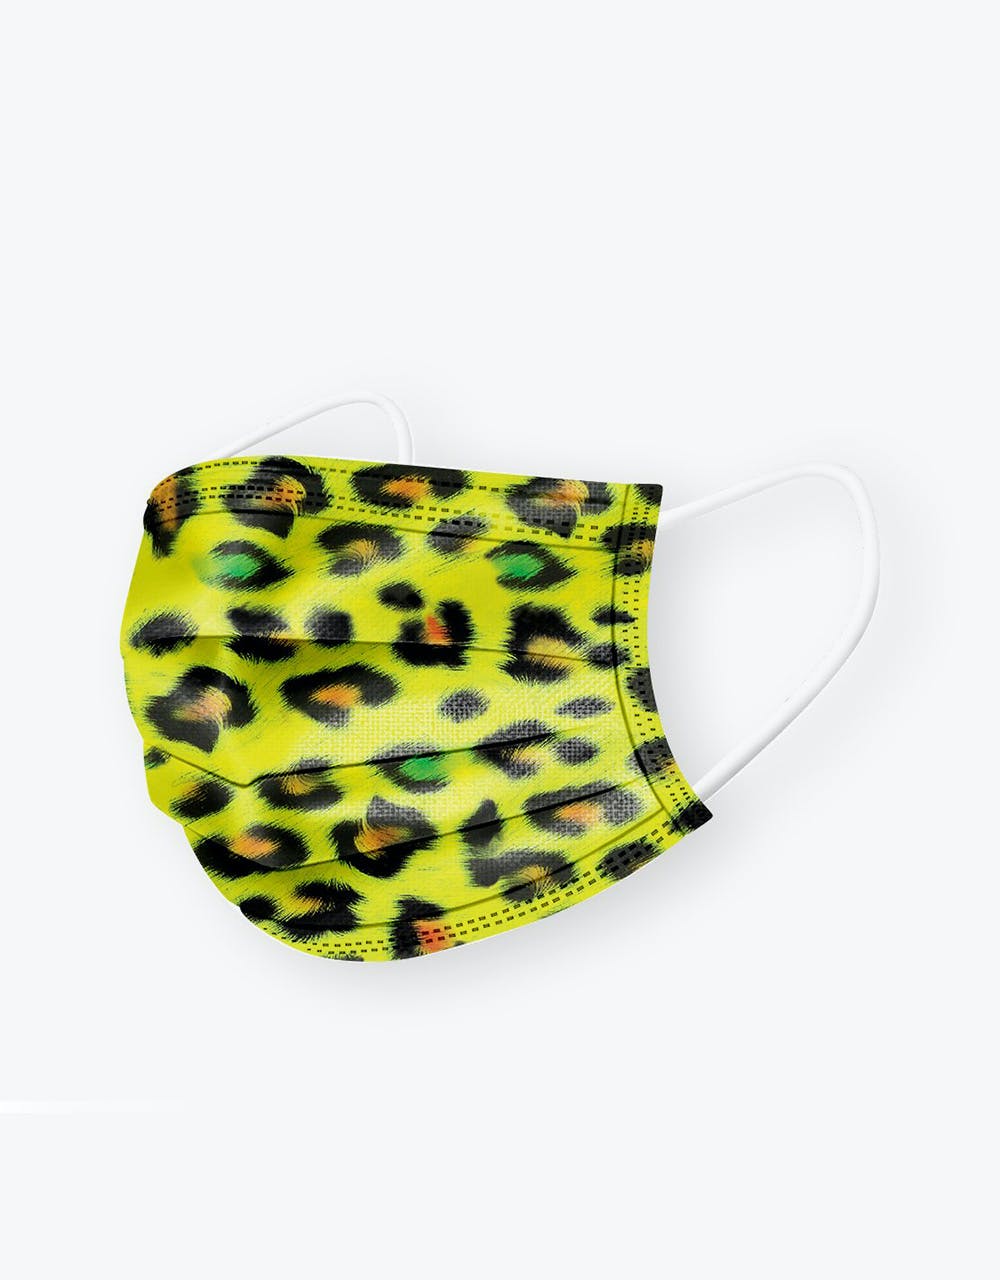 Medipop Disposable D Face Mask 5 Pack - Yellow Leopard